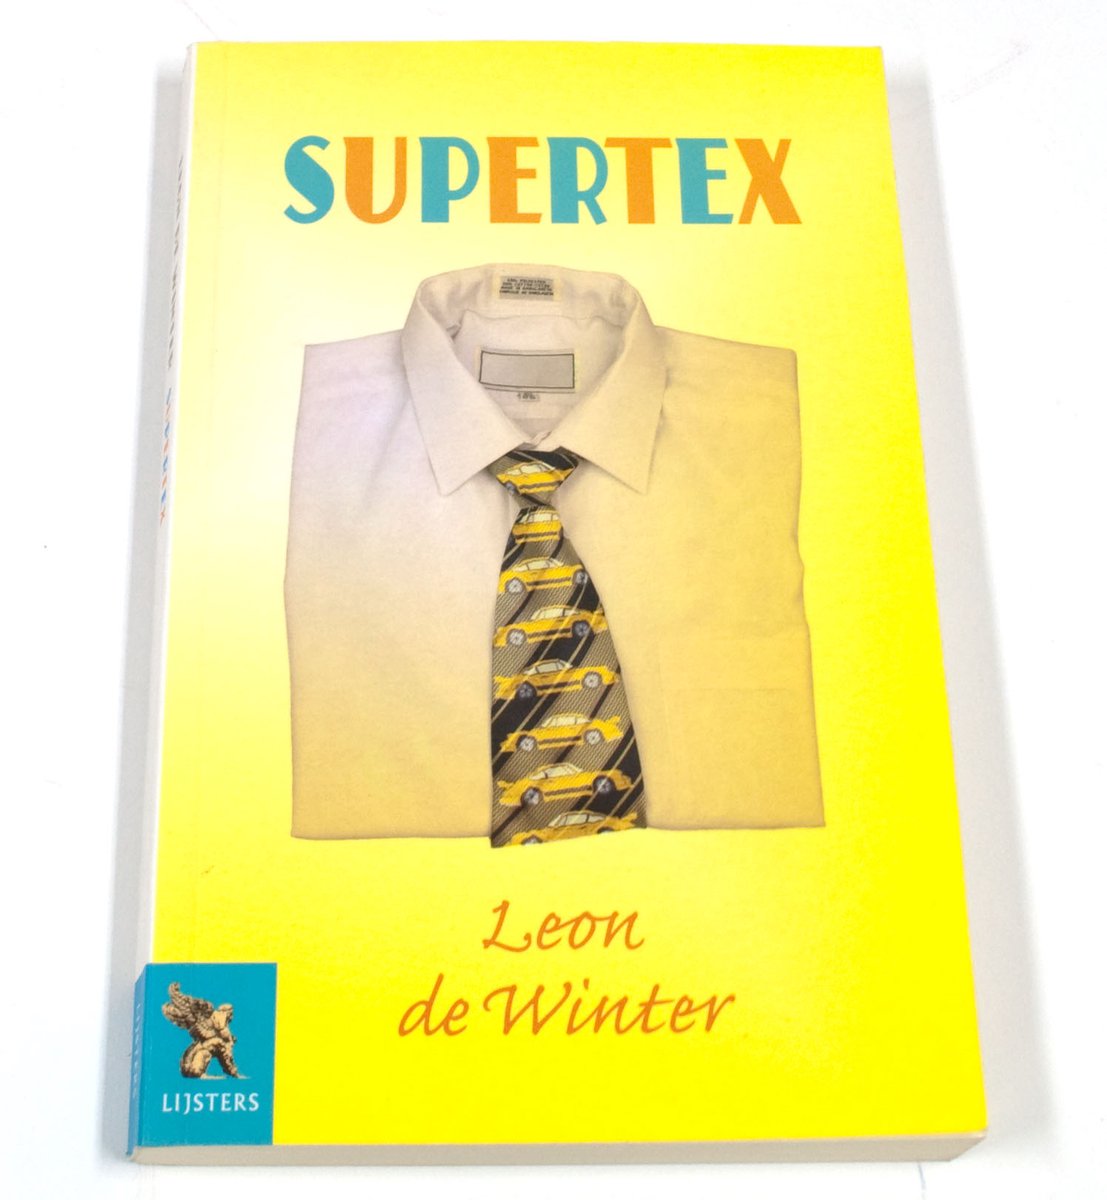 Supertex - Leon de Winter